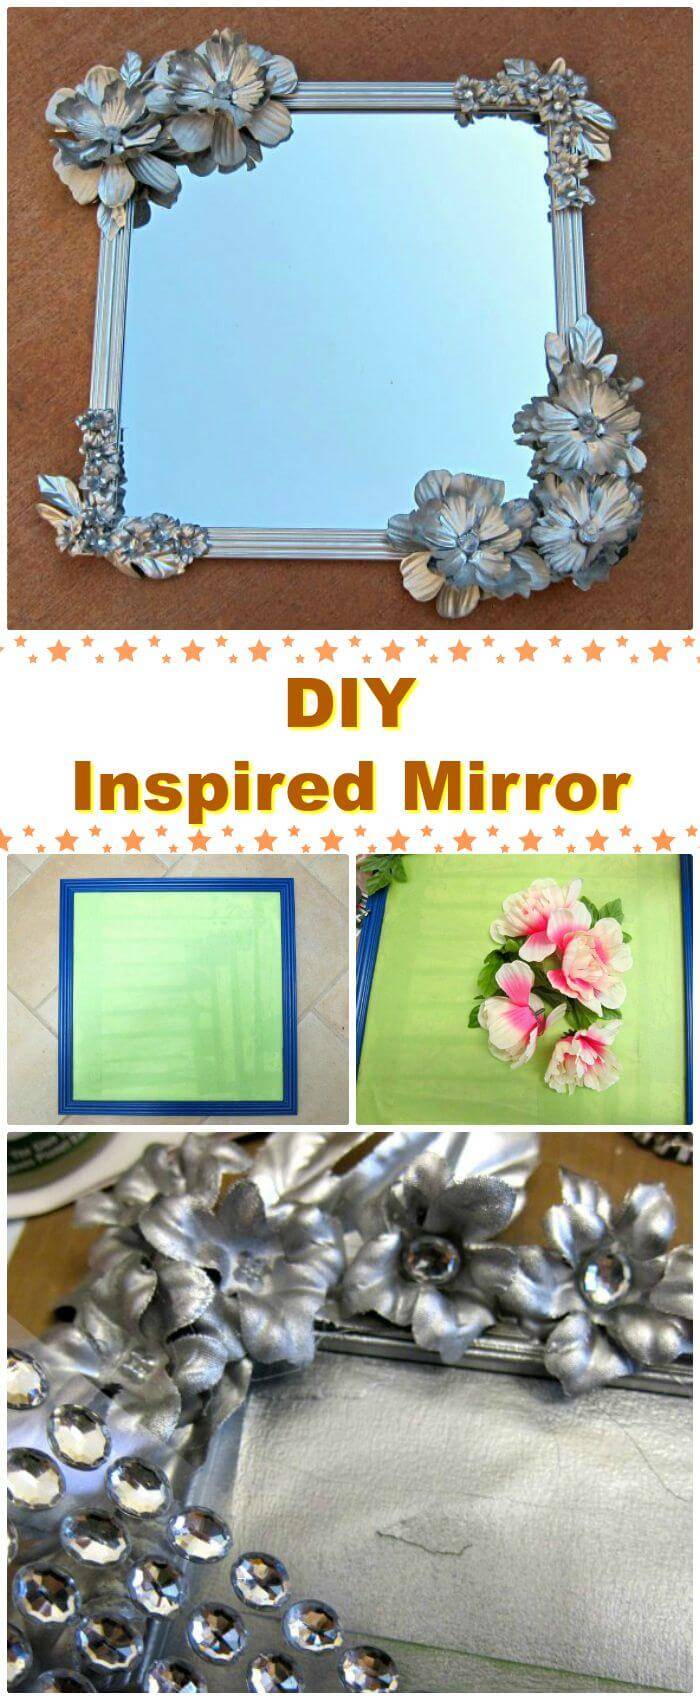 DIY Dollar Stored Inspired Mirror